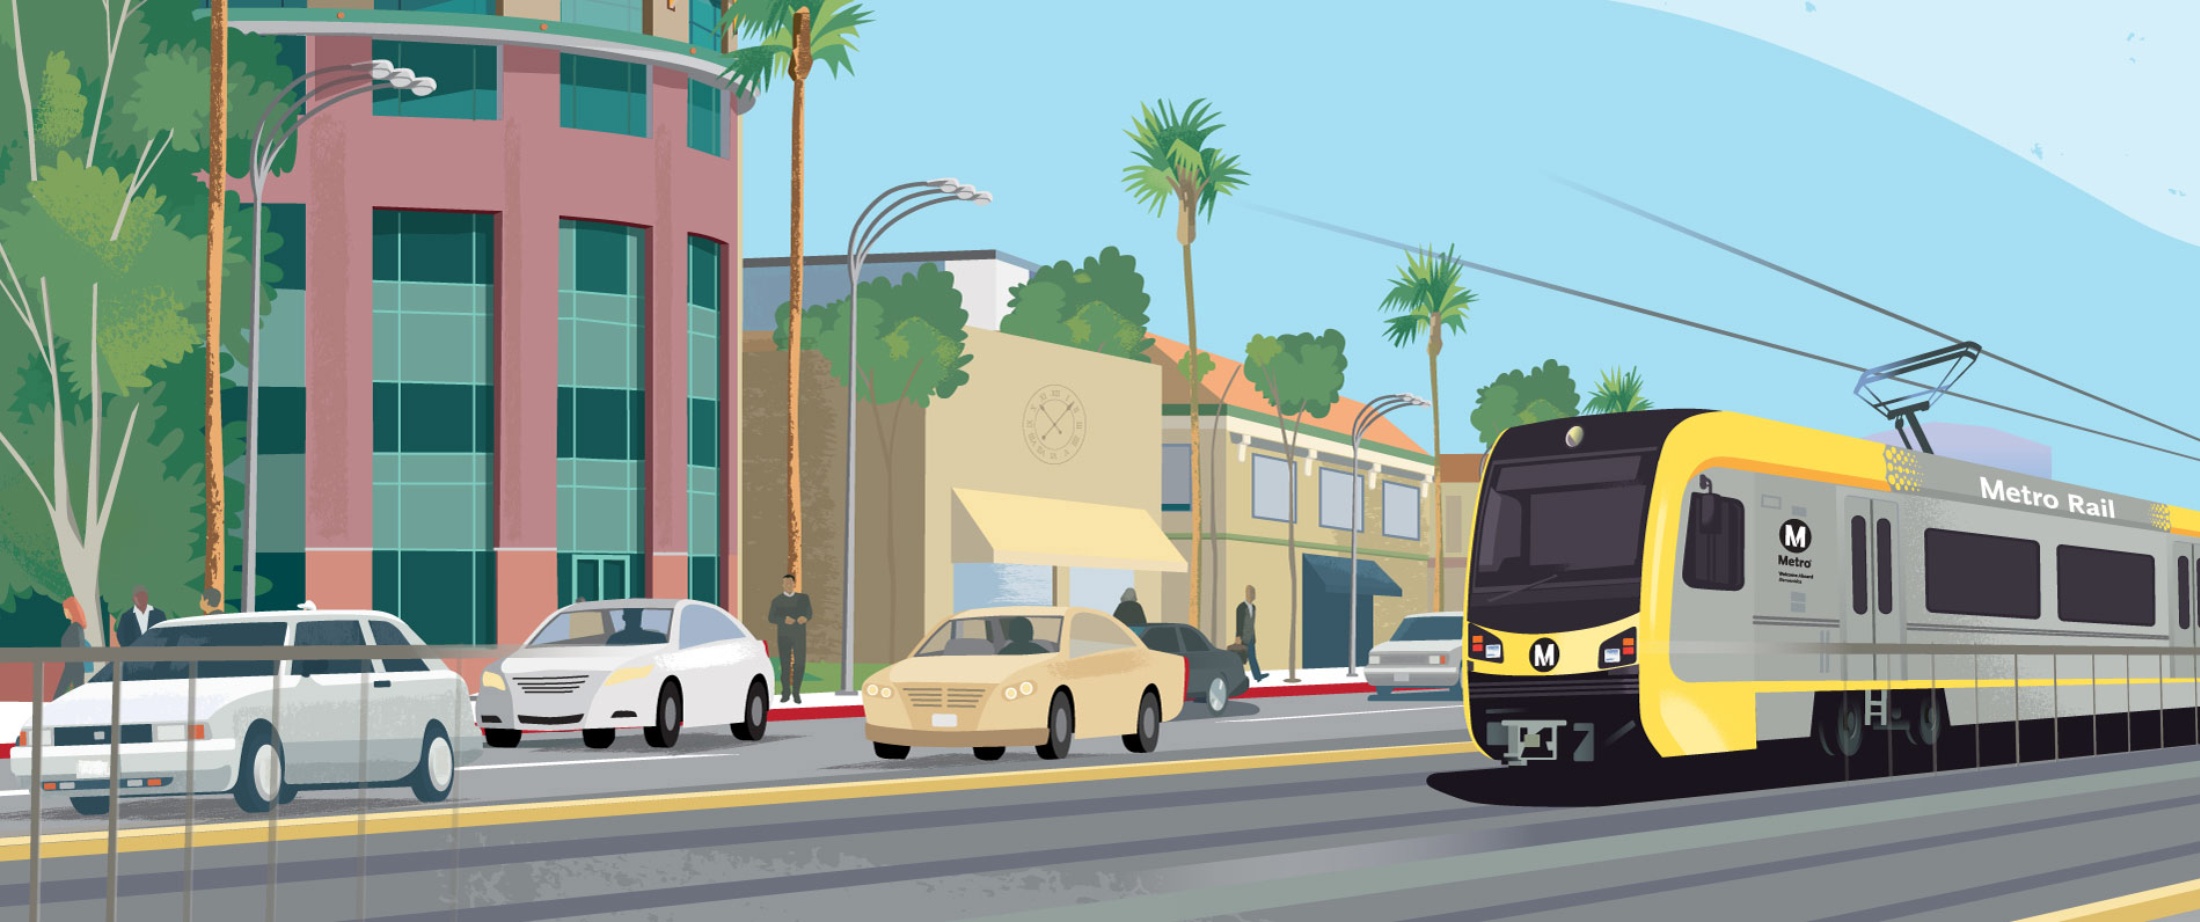 Metro light rail vehicle in traffic in San Fernando Valley